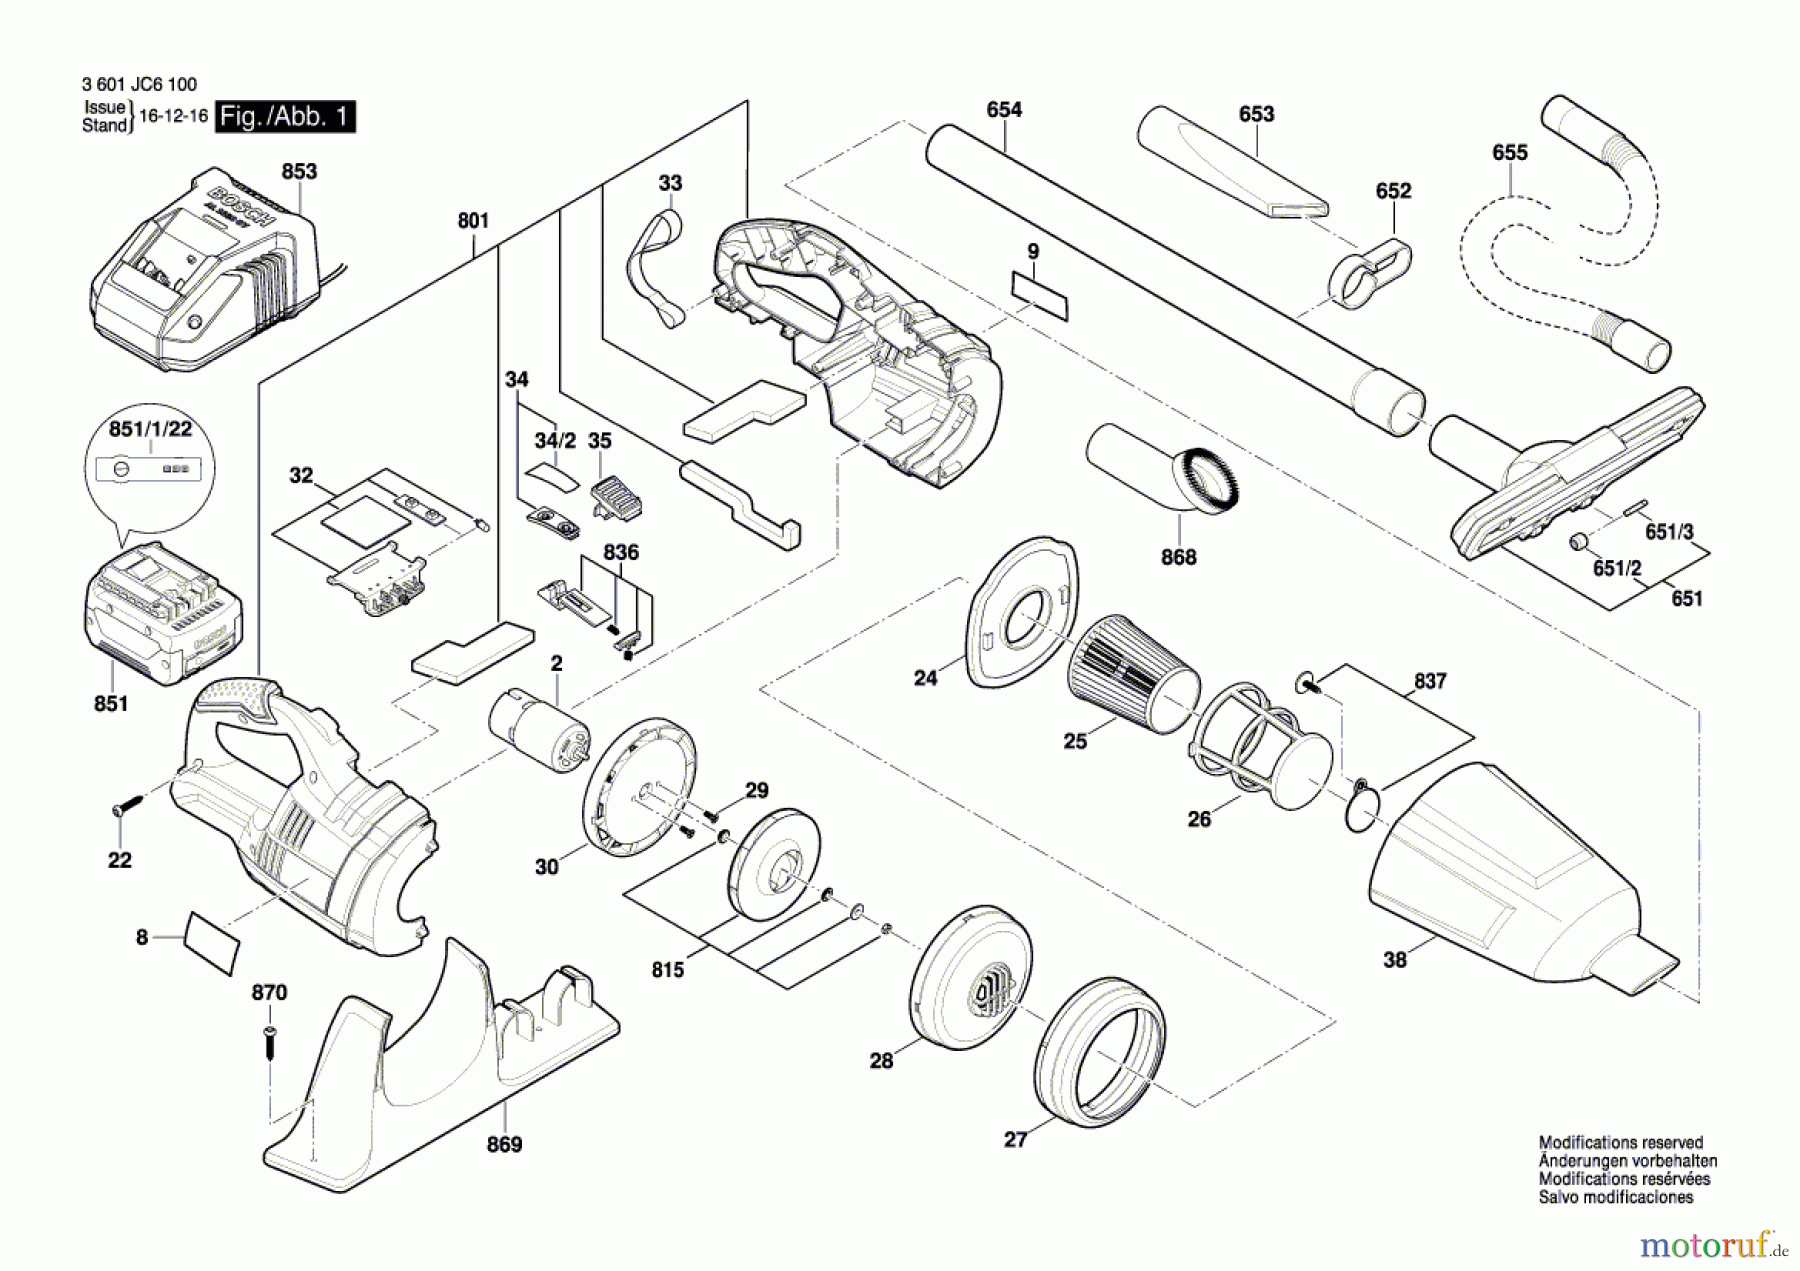  Bosch Akku Werkzeug Akku-Sauger GAS 18 V-LI Seite 1